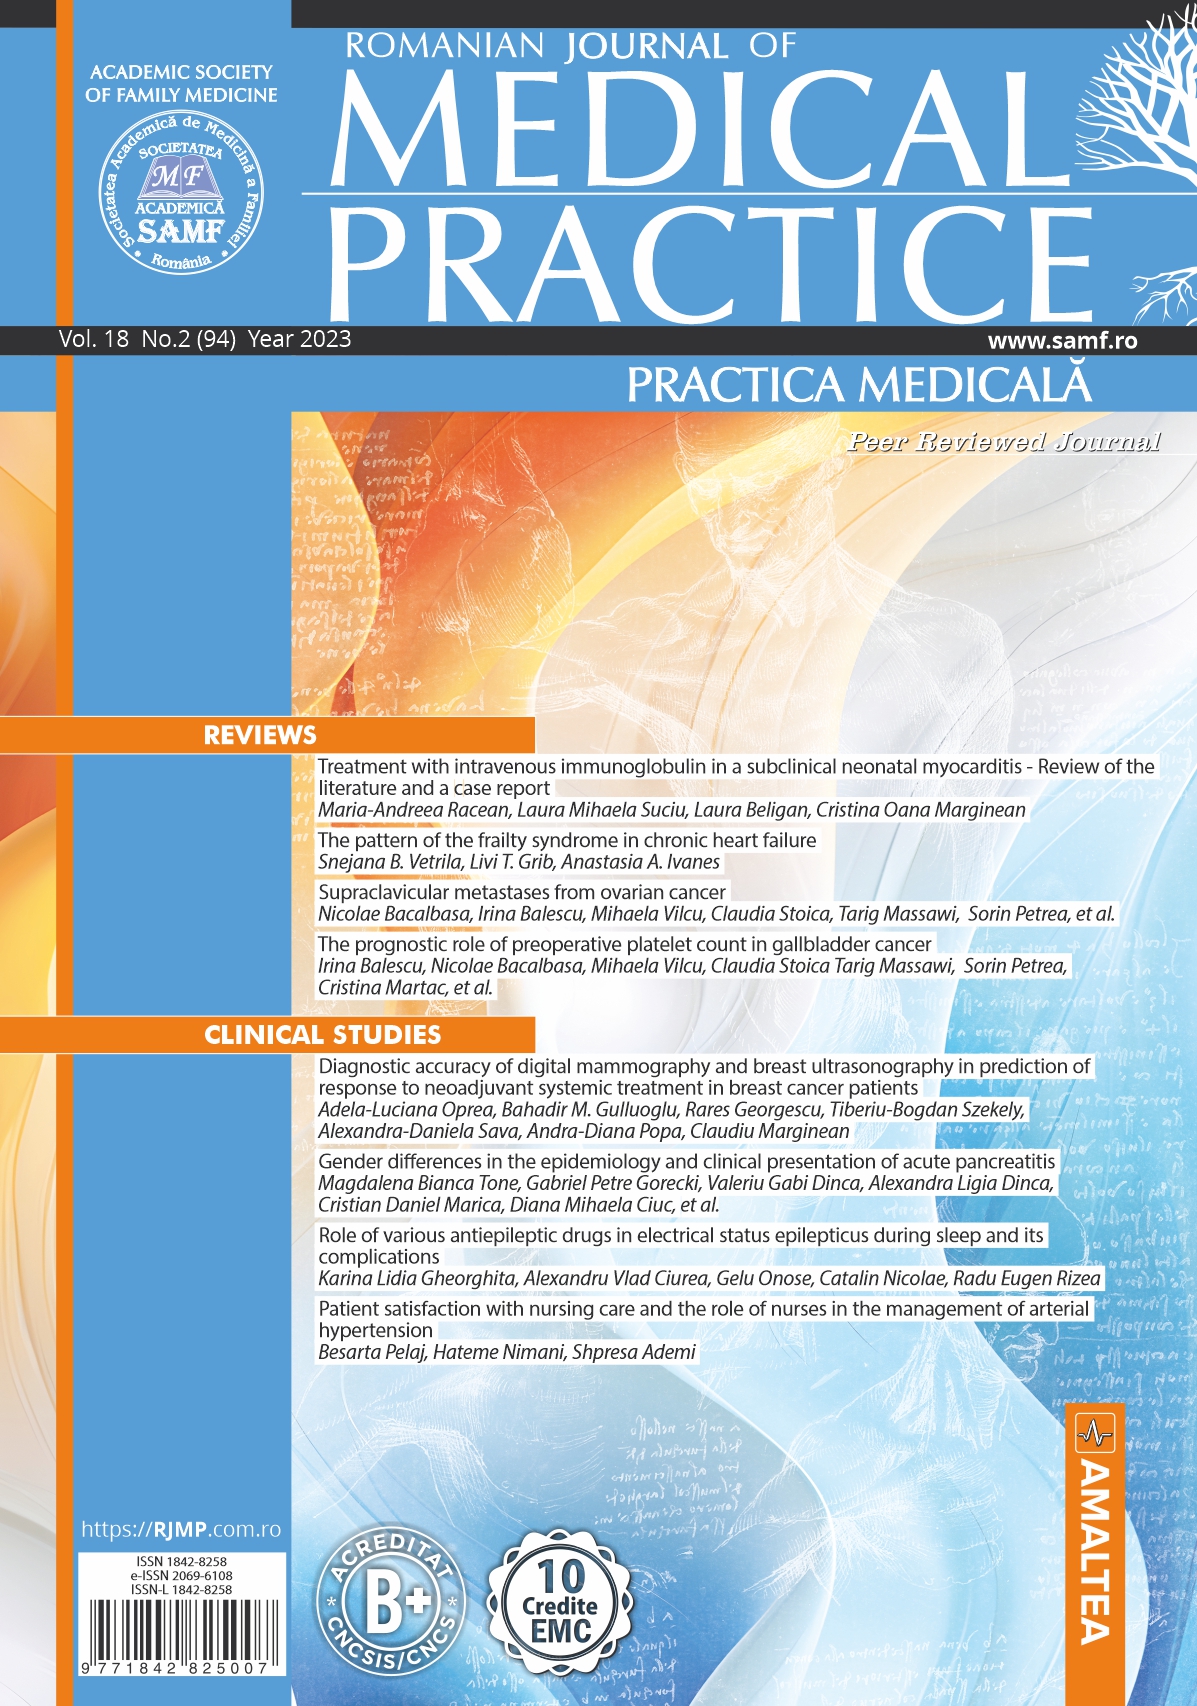 Romanian Journal of Medical Practice | Practica Medicala, Vol. 18, No. 2 (94), 2023